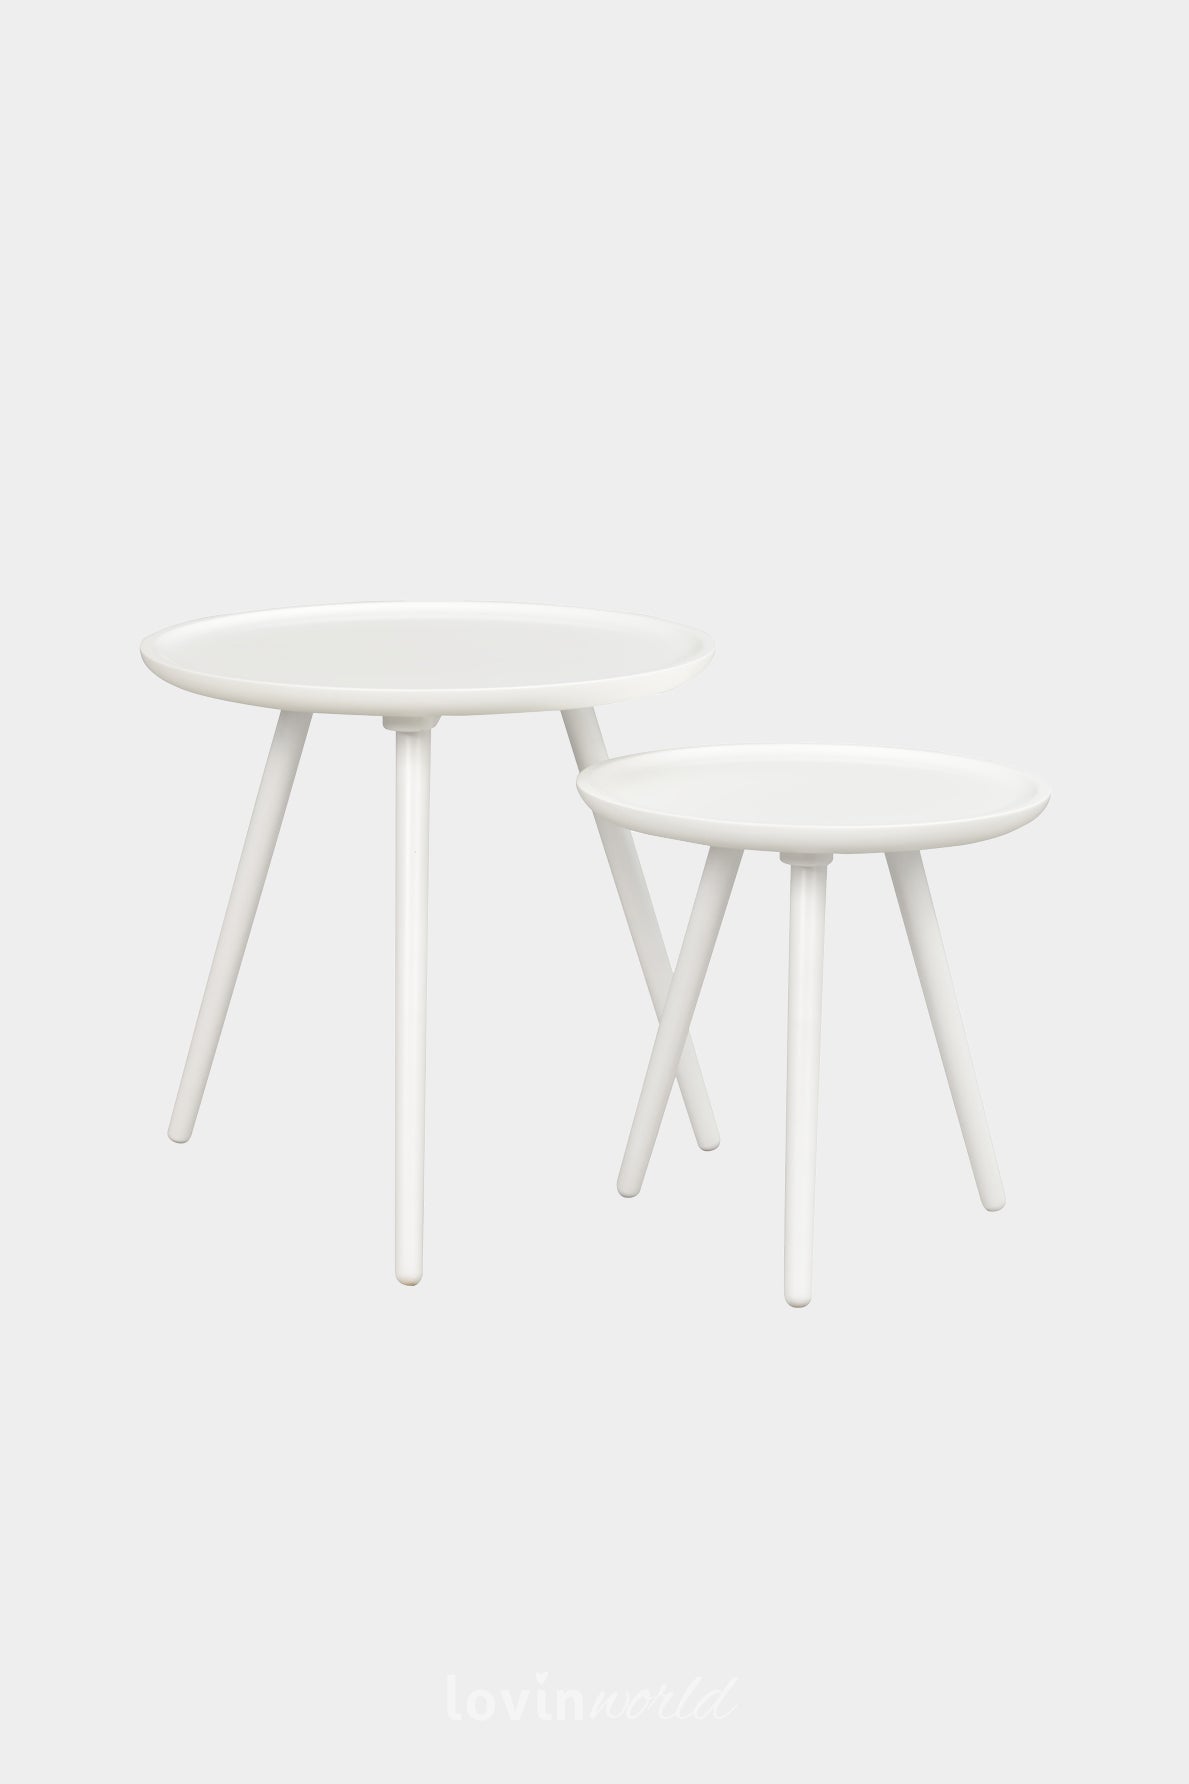 2 tavoli da caffè Daisy, in colore bianco, 50x50 cm.-LovinWorld